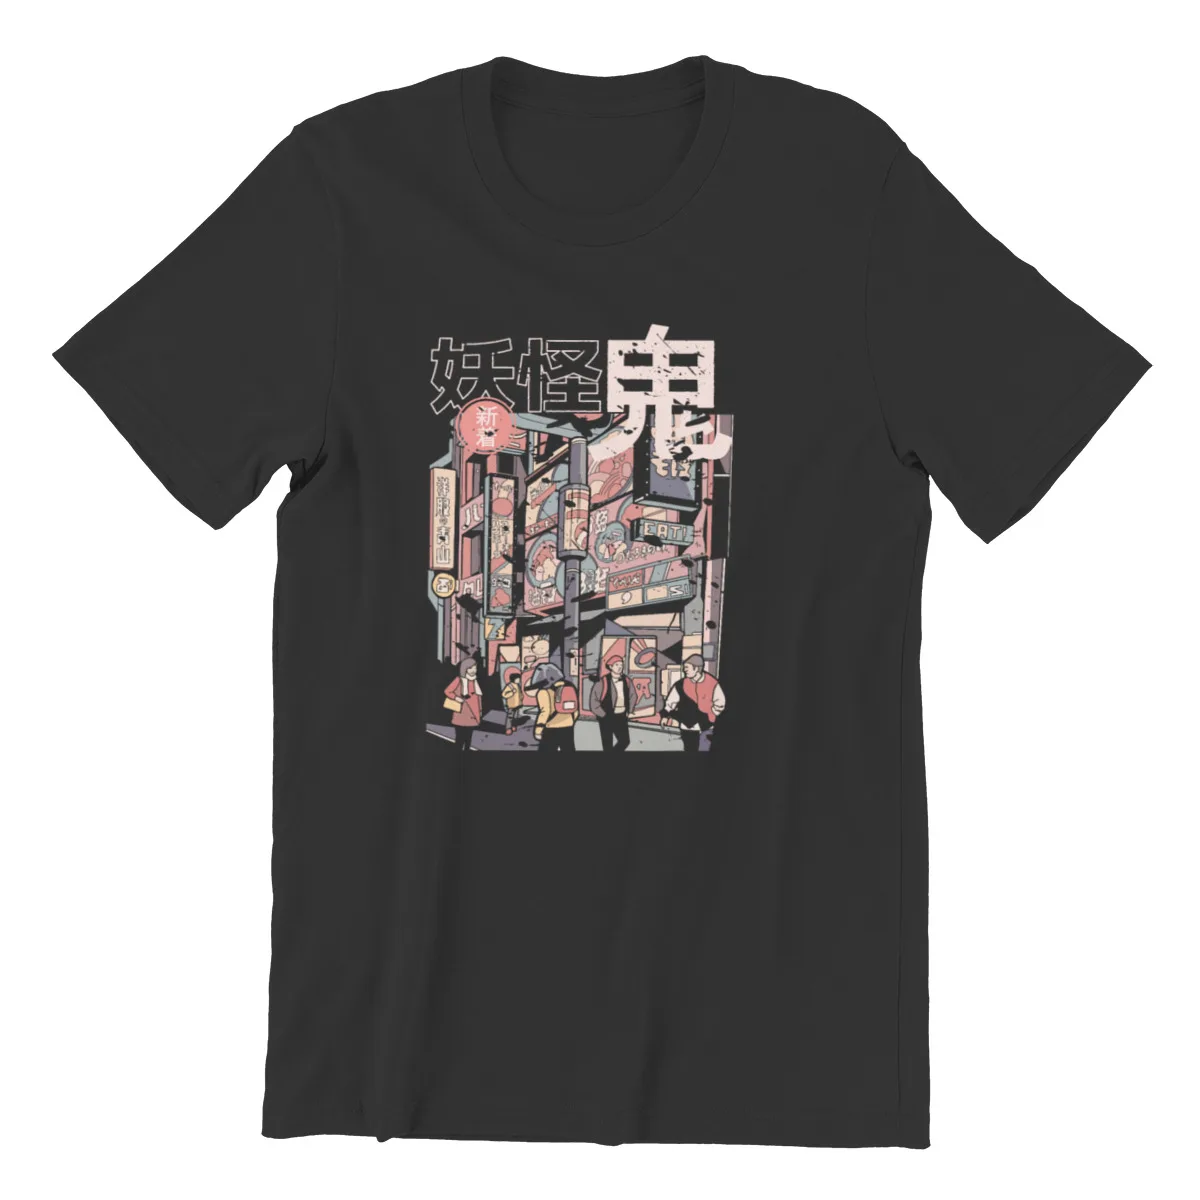 Tokyo Japan Essentials Games Tops Unisex Aesthetic Men's T-Shirts Men Cotton Tshirt Tees Tops Harajuku Streetwear